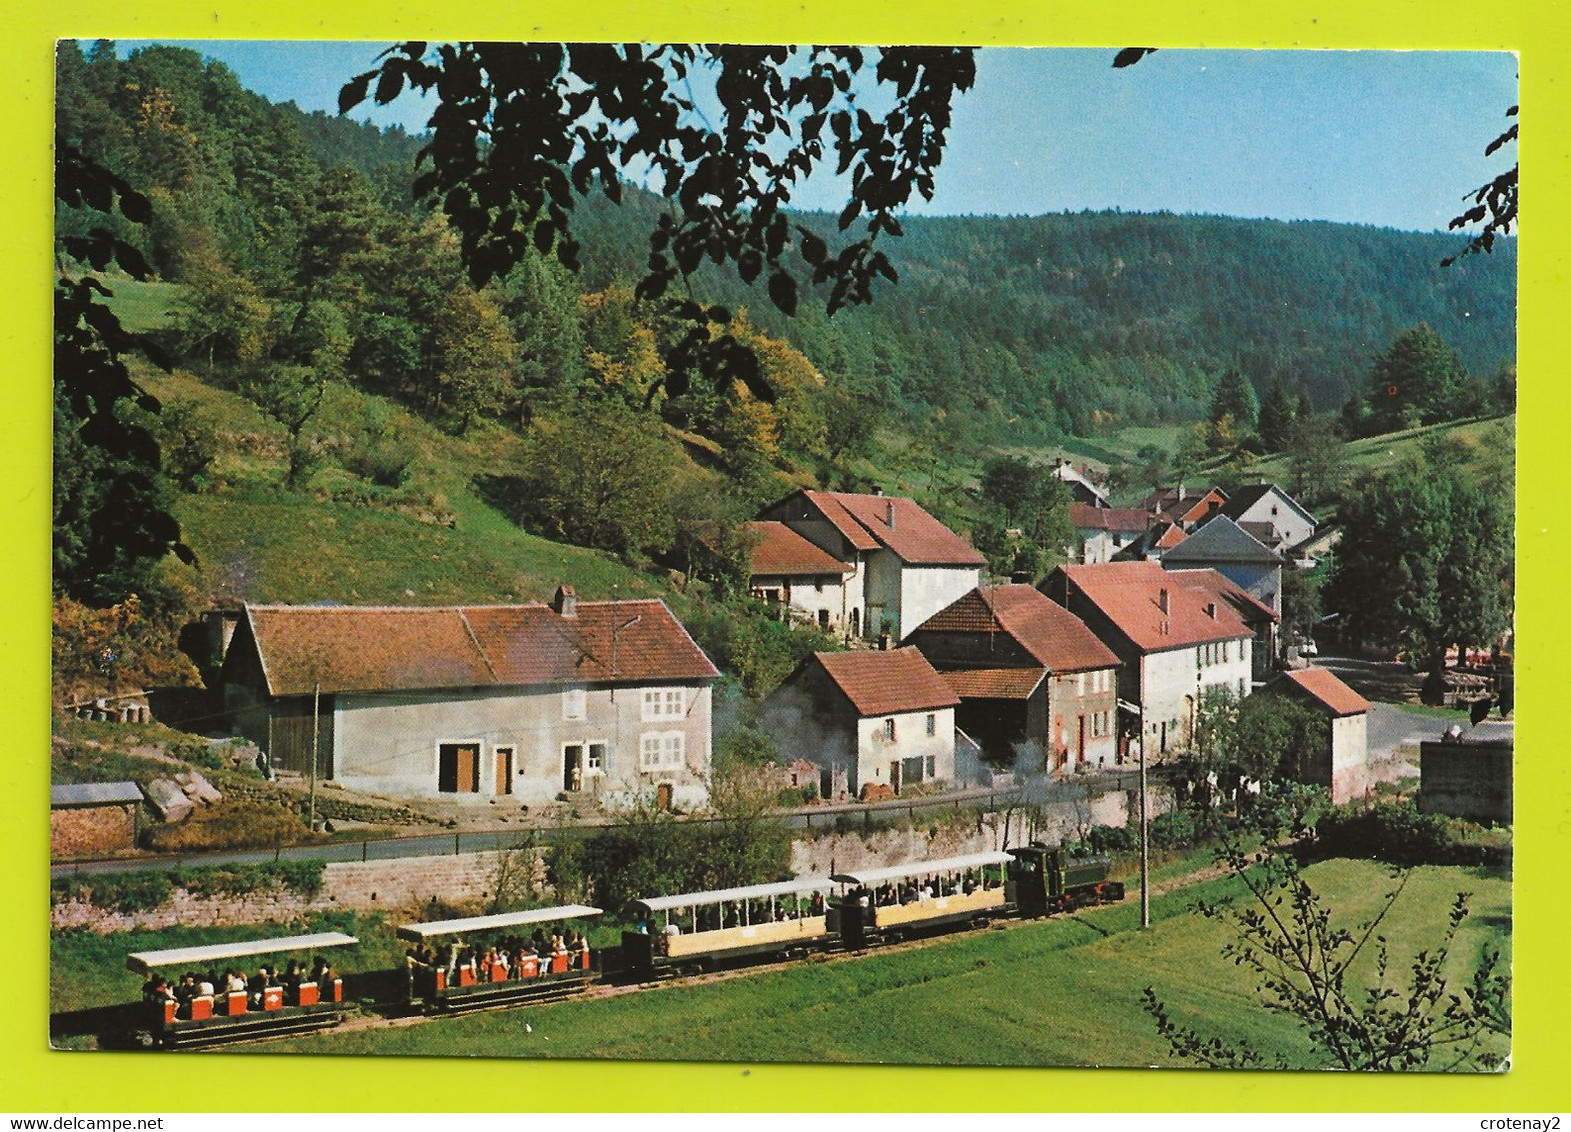 57 ABRESCHVILLER Vers Sarrebourg N°17182 Petit Train Vapeur Chemin De Fer Forestier Hameau De Grand Soldat En 1973 - Sarrebourg